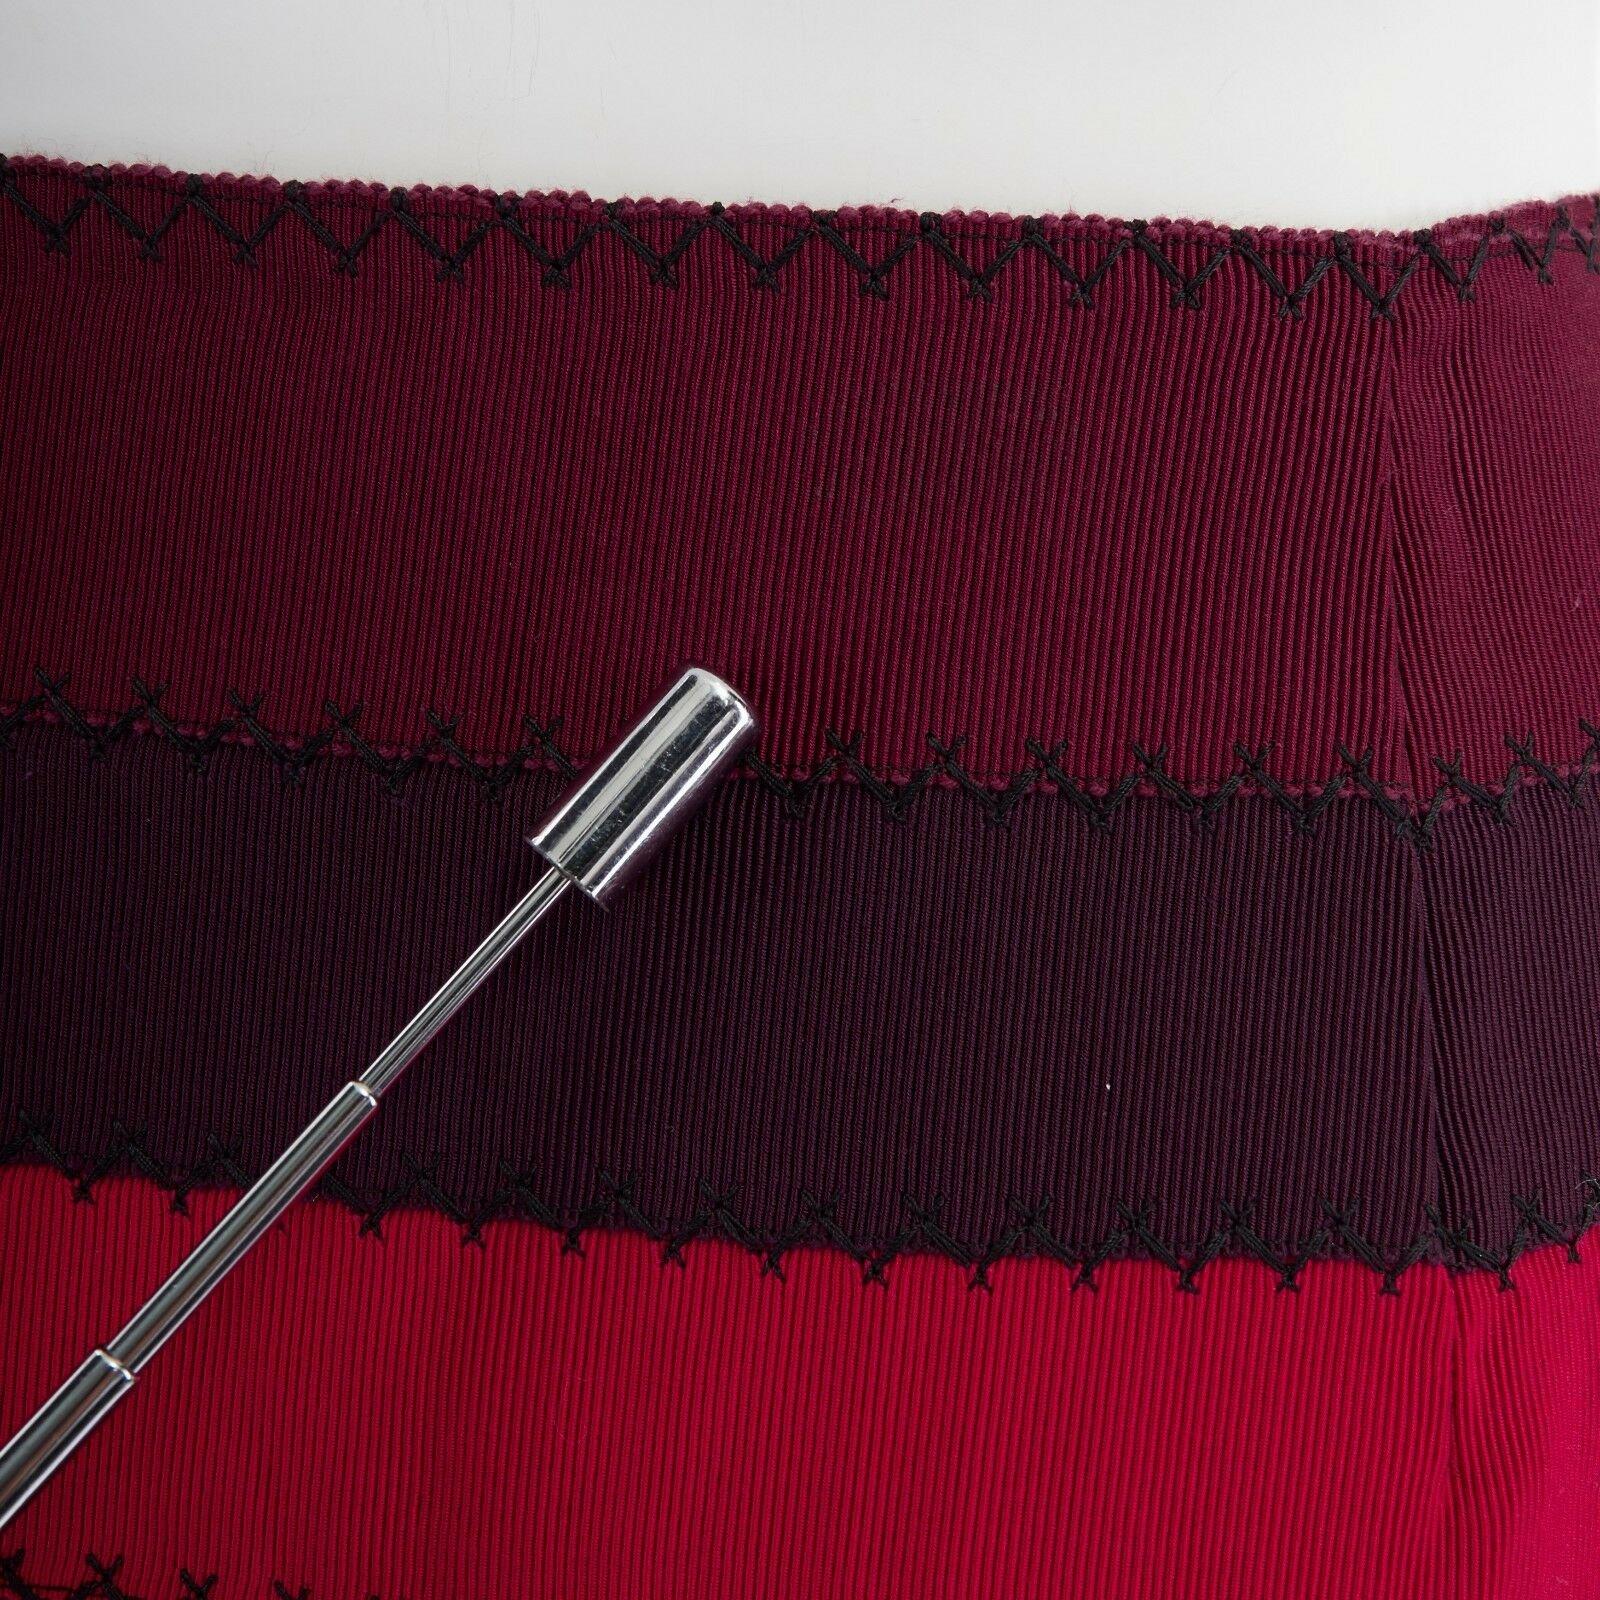 MARY KATRANTZOU red purple stripe ribbon overstitched fitted midi skirt UK8 26